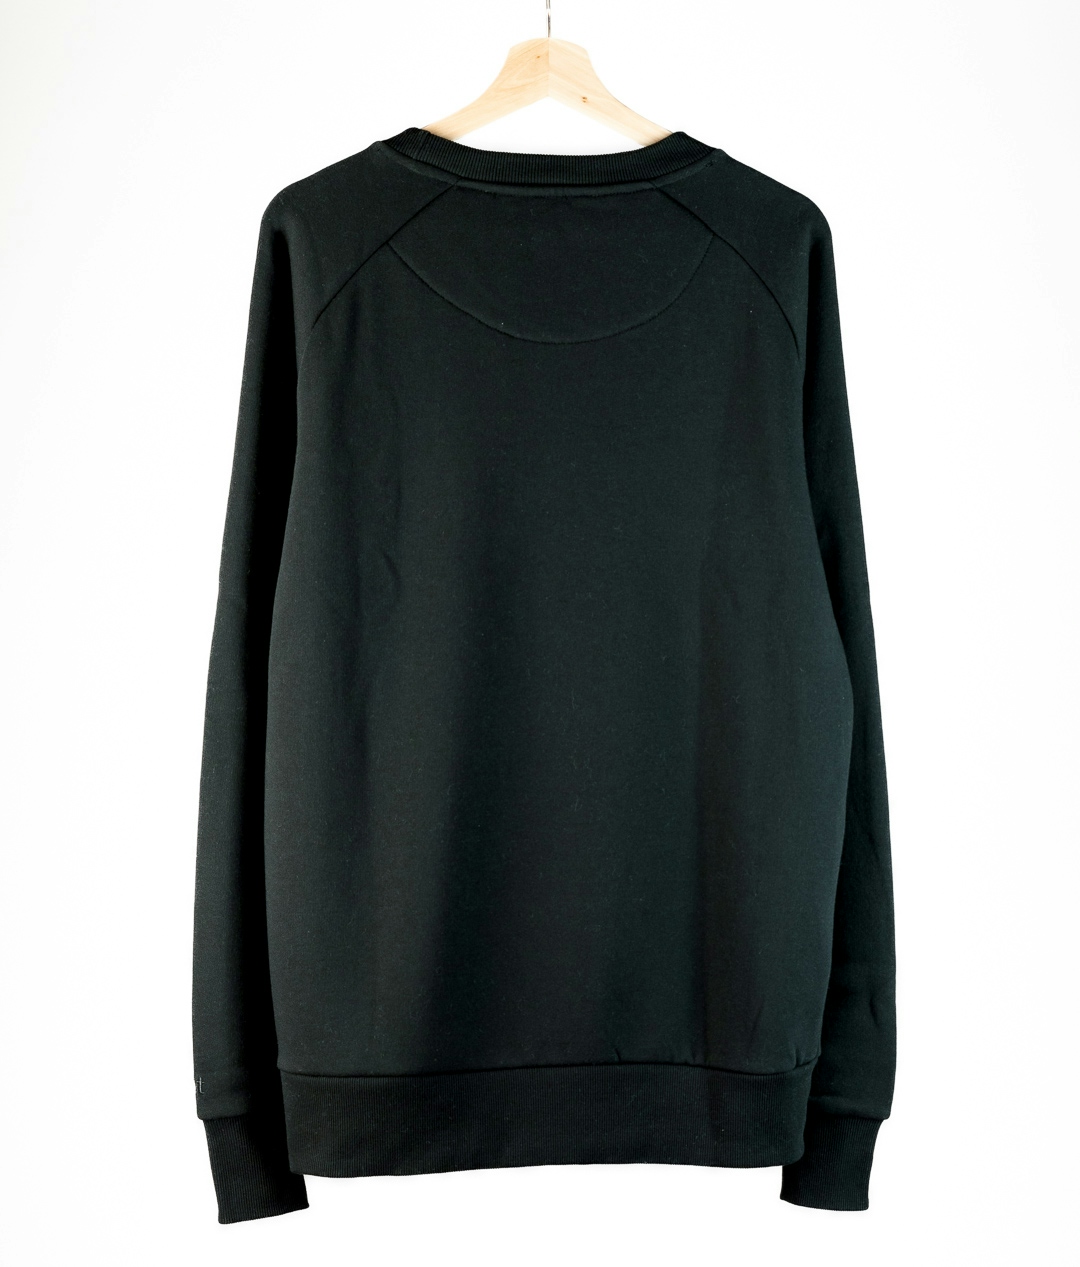 Vintage & Second Hand Sweet Sktbs - Steew Sweater Black 2